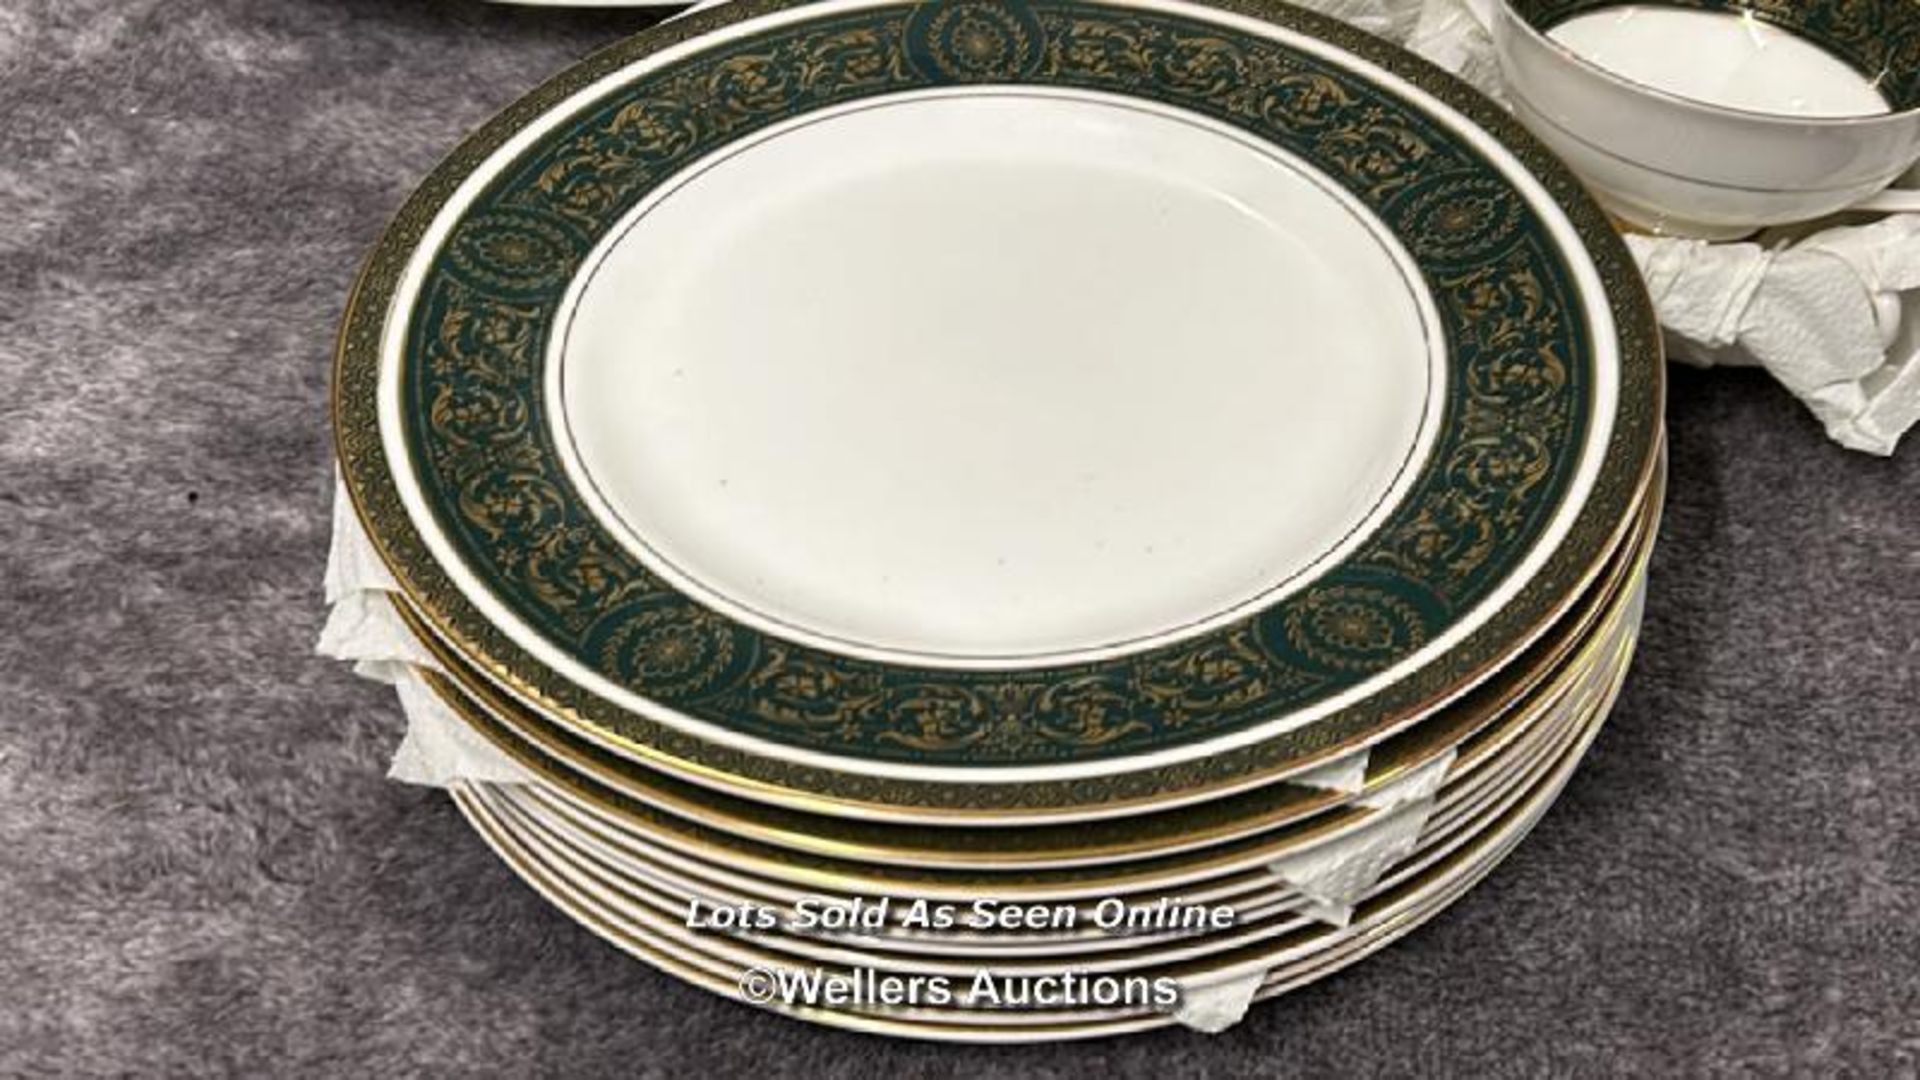 Royal Doulton "Vanborough" dinner service including 10 dinner plates, 15 tea plates, 10 side plates, - Image 2 of 8